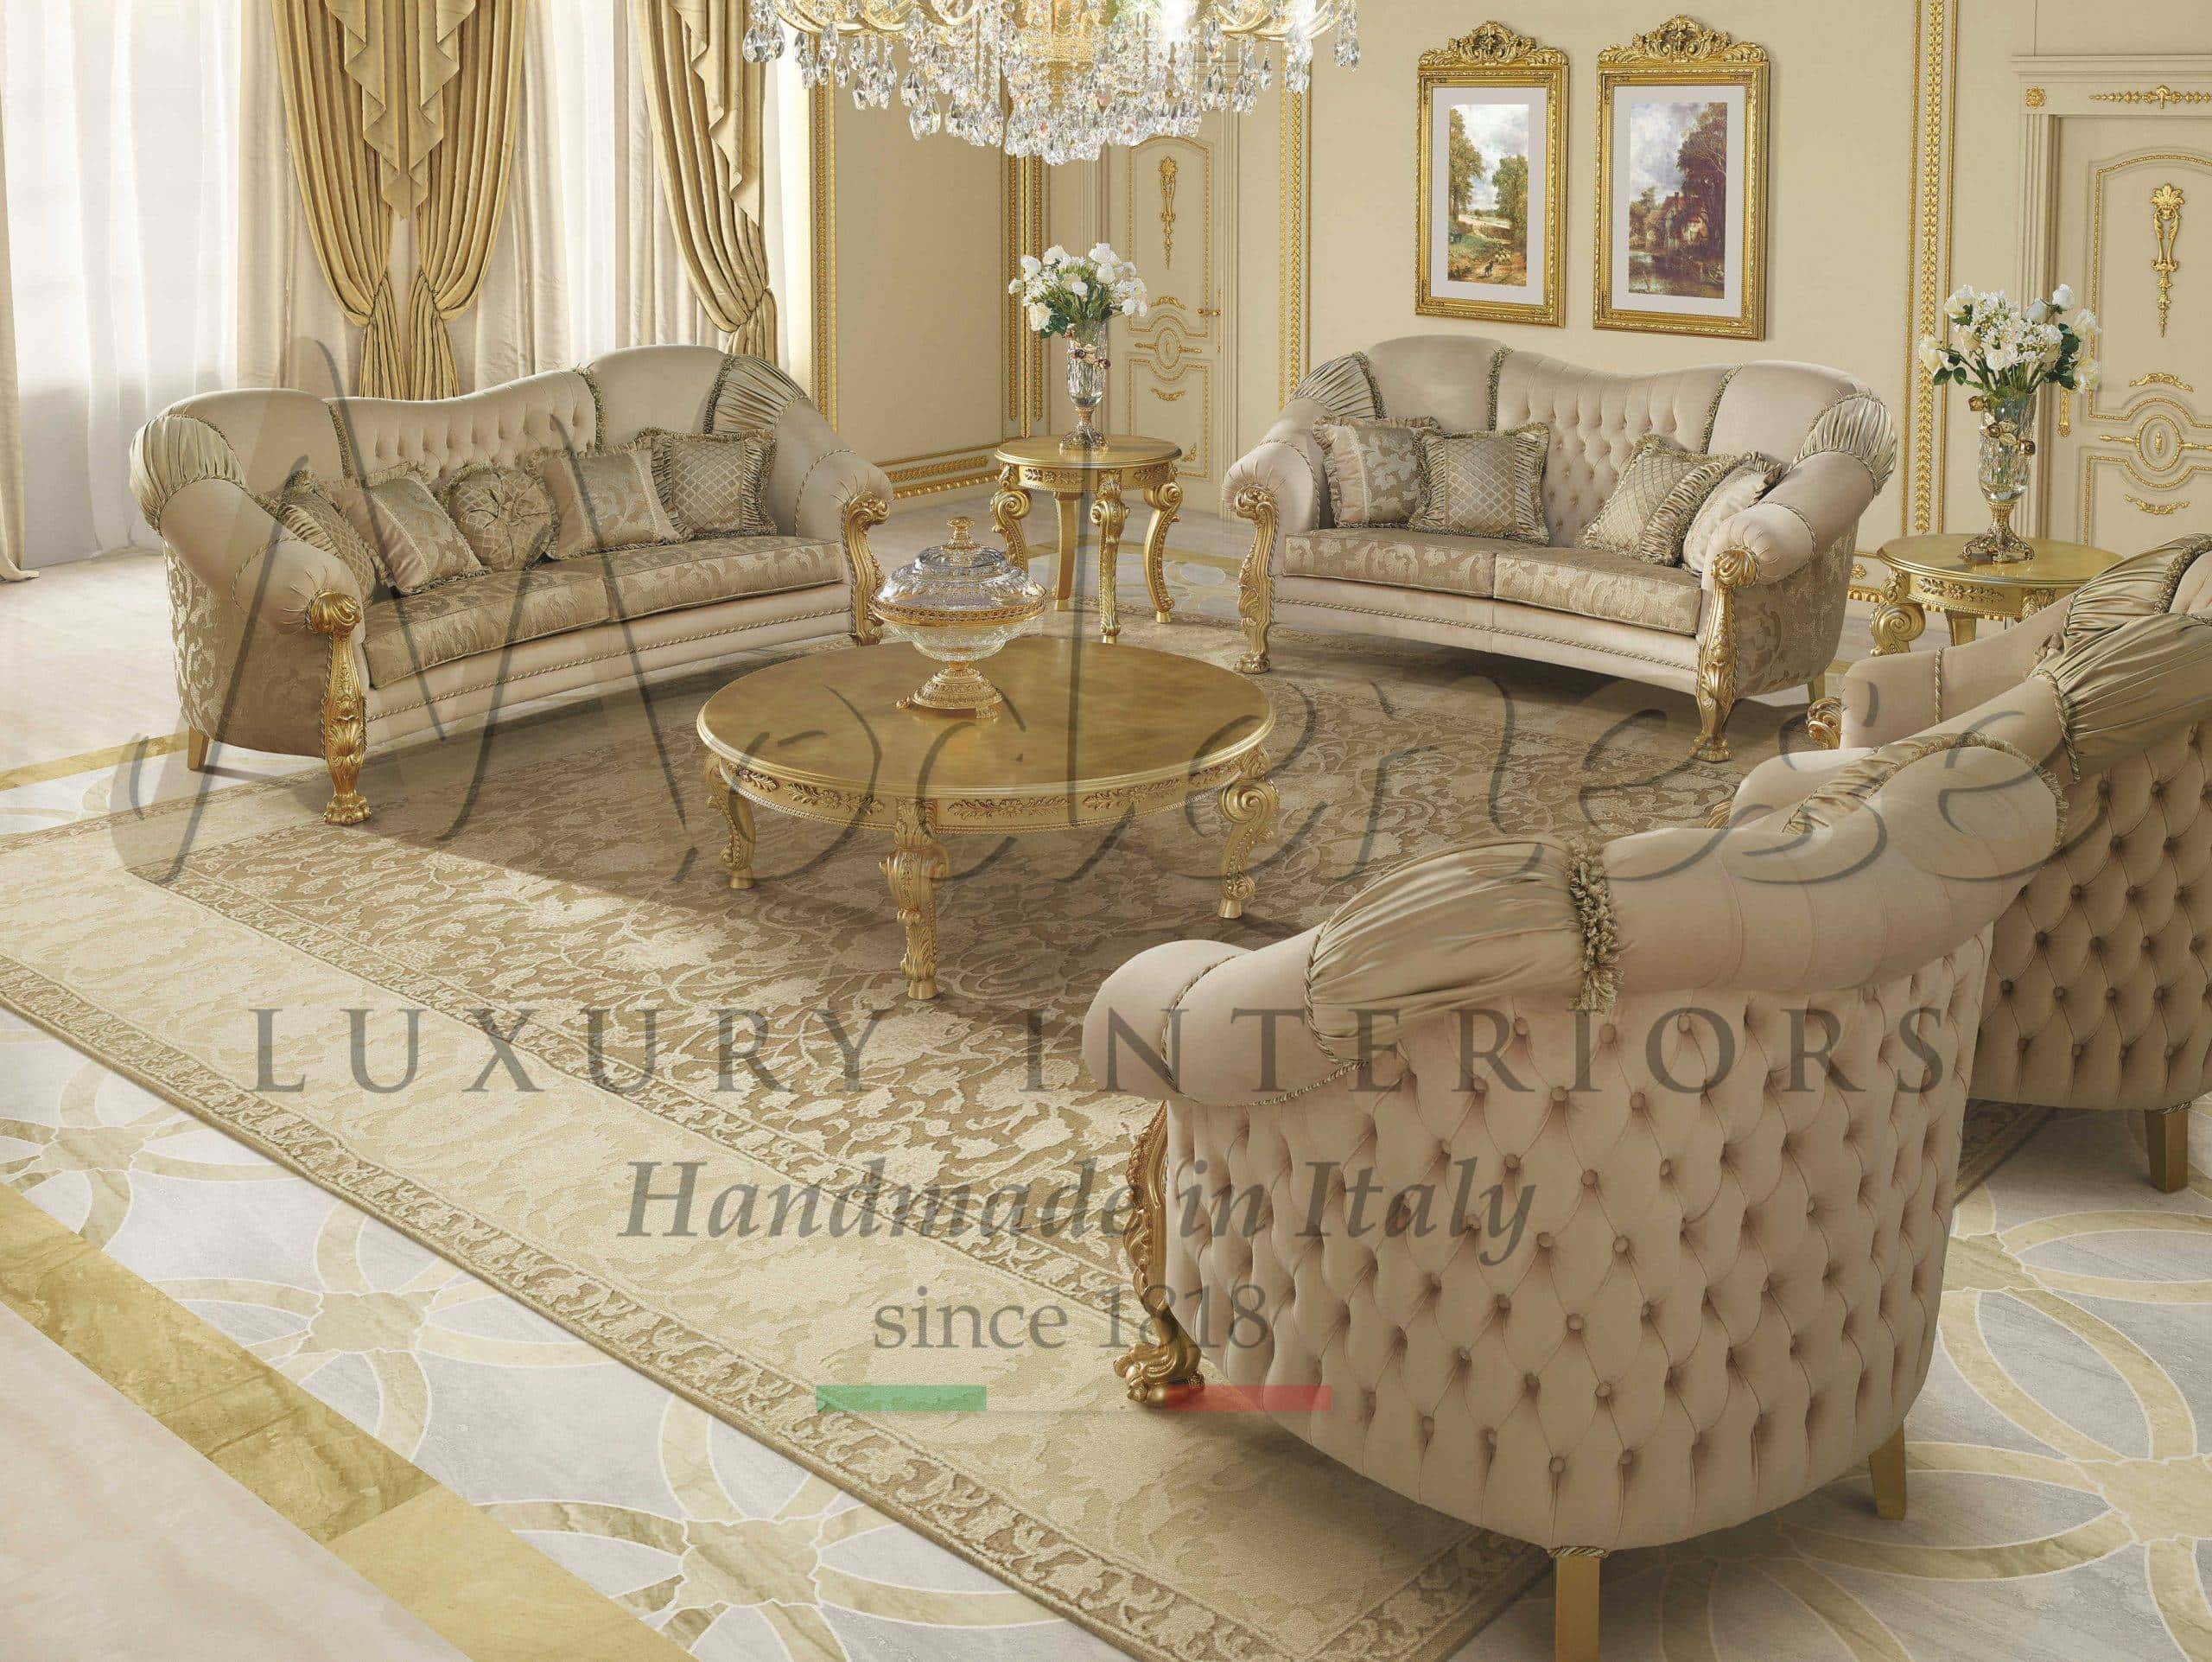 Classic Luxury Living Room Furniture Italian Artisanal Handmade Furniture High End Italian Home Decor Furnishing Luxury Italian Classic Furniture